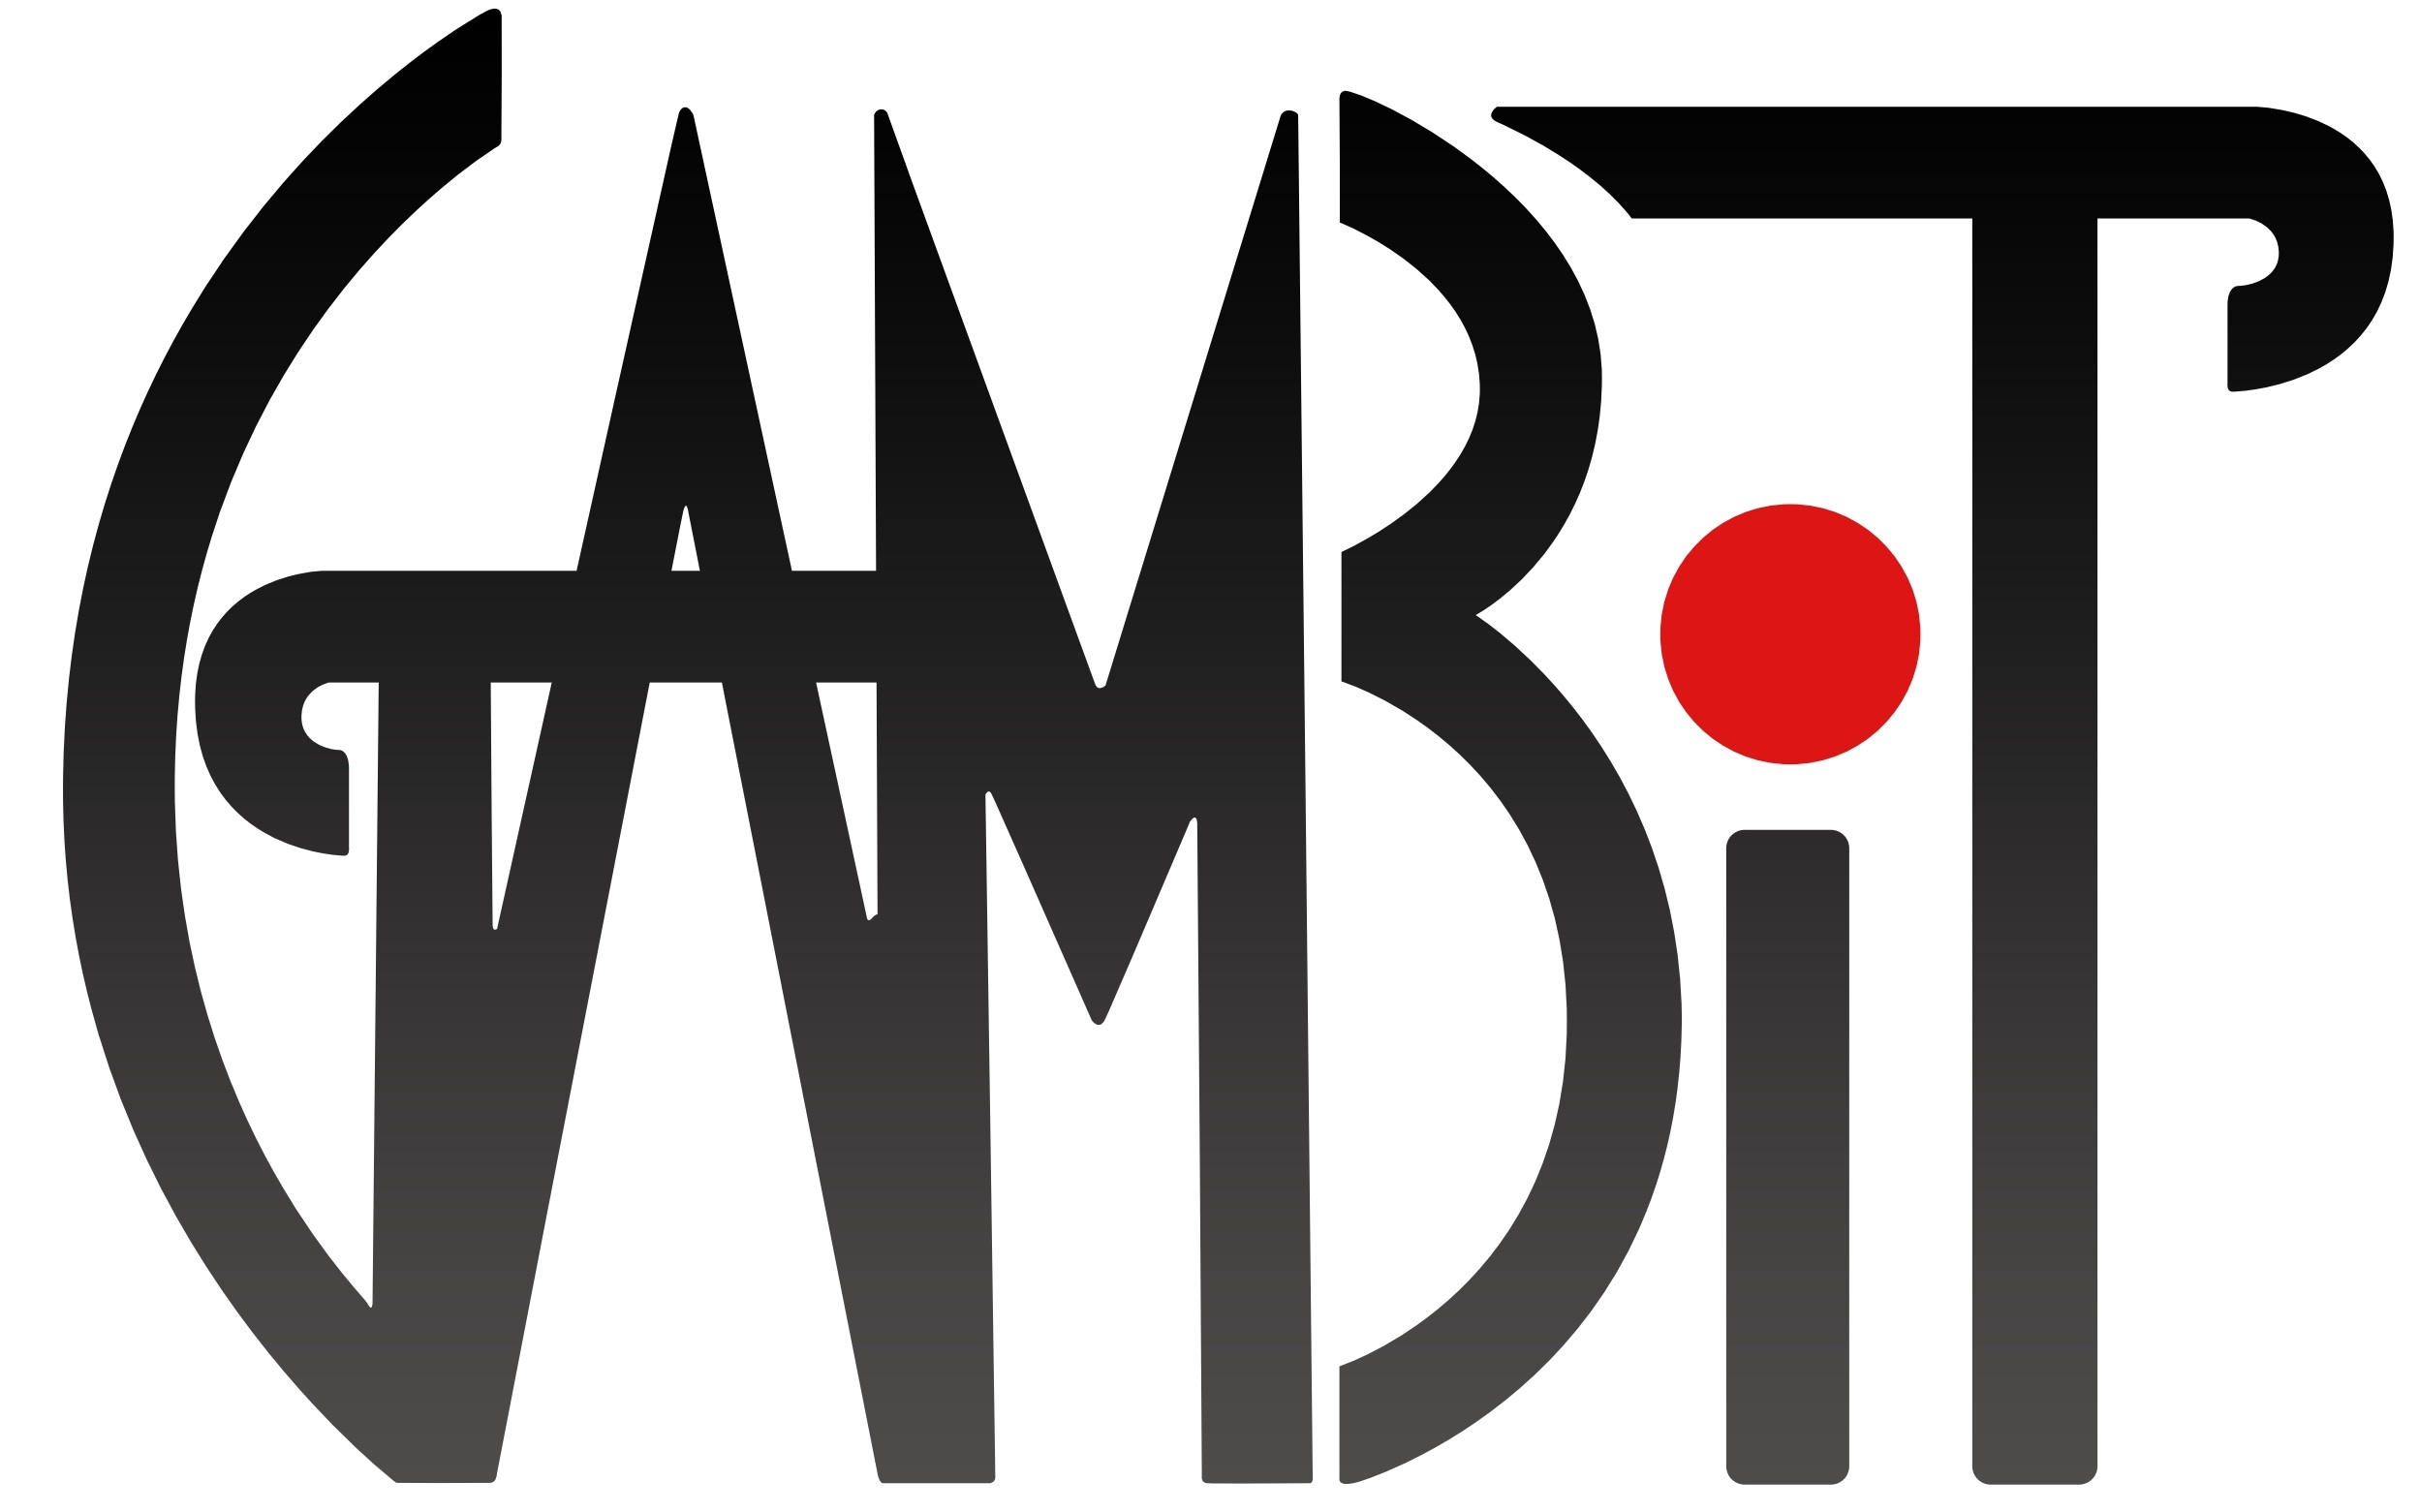 GAMBIT Logo.jpg 3160b95c8406c5d00919d314aaea6219